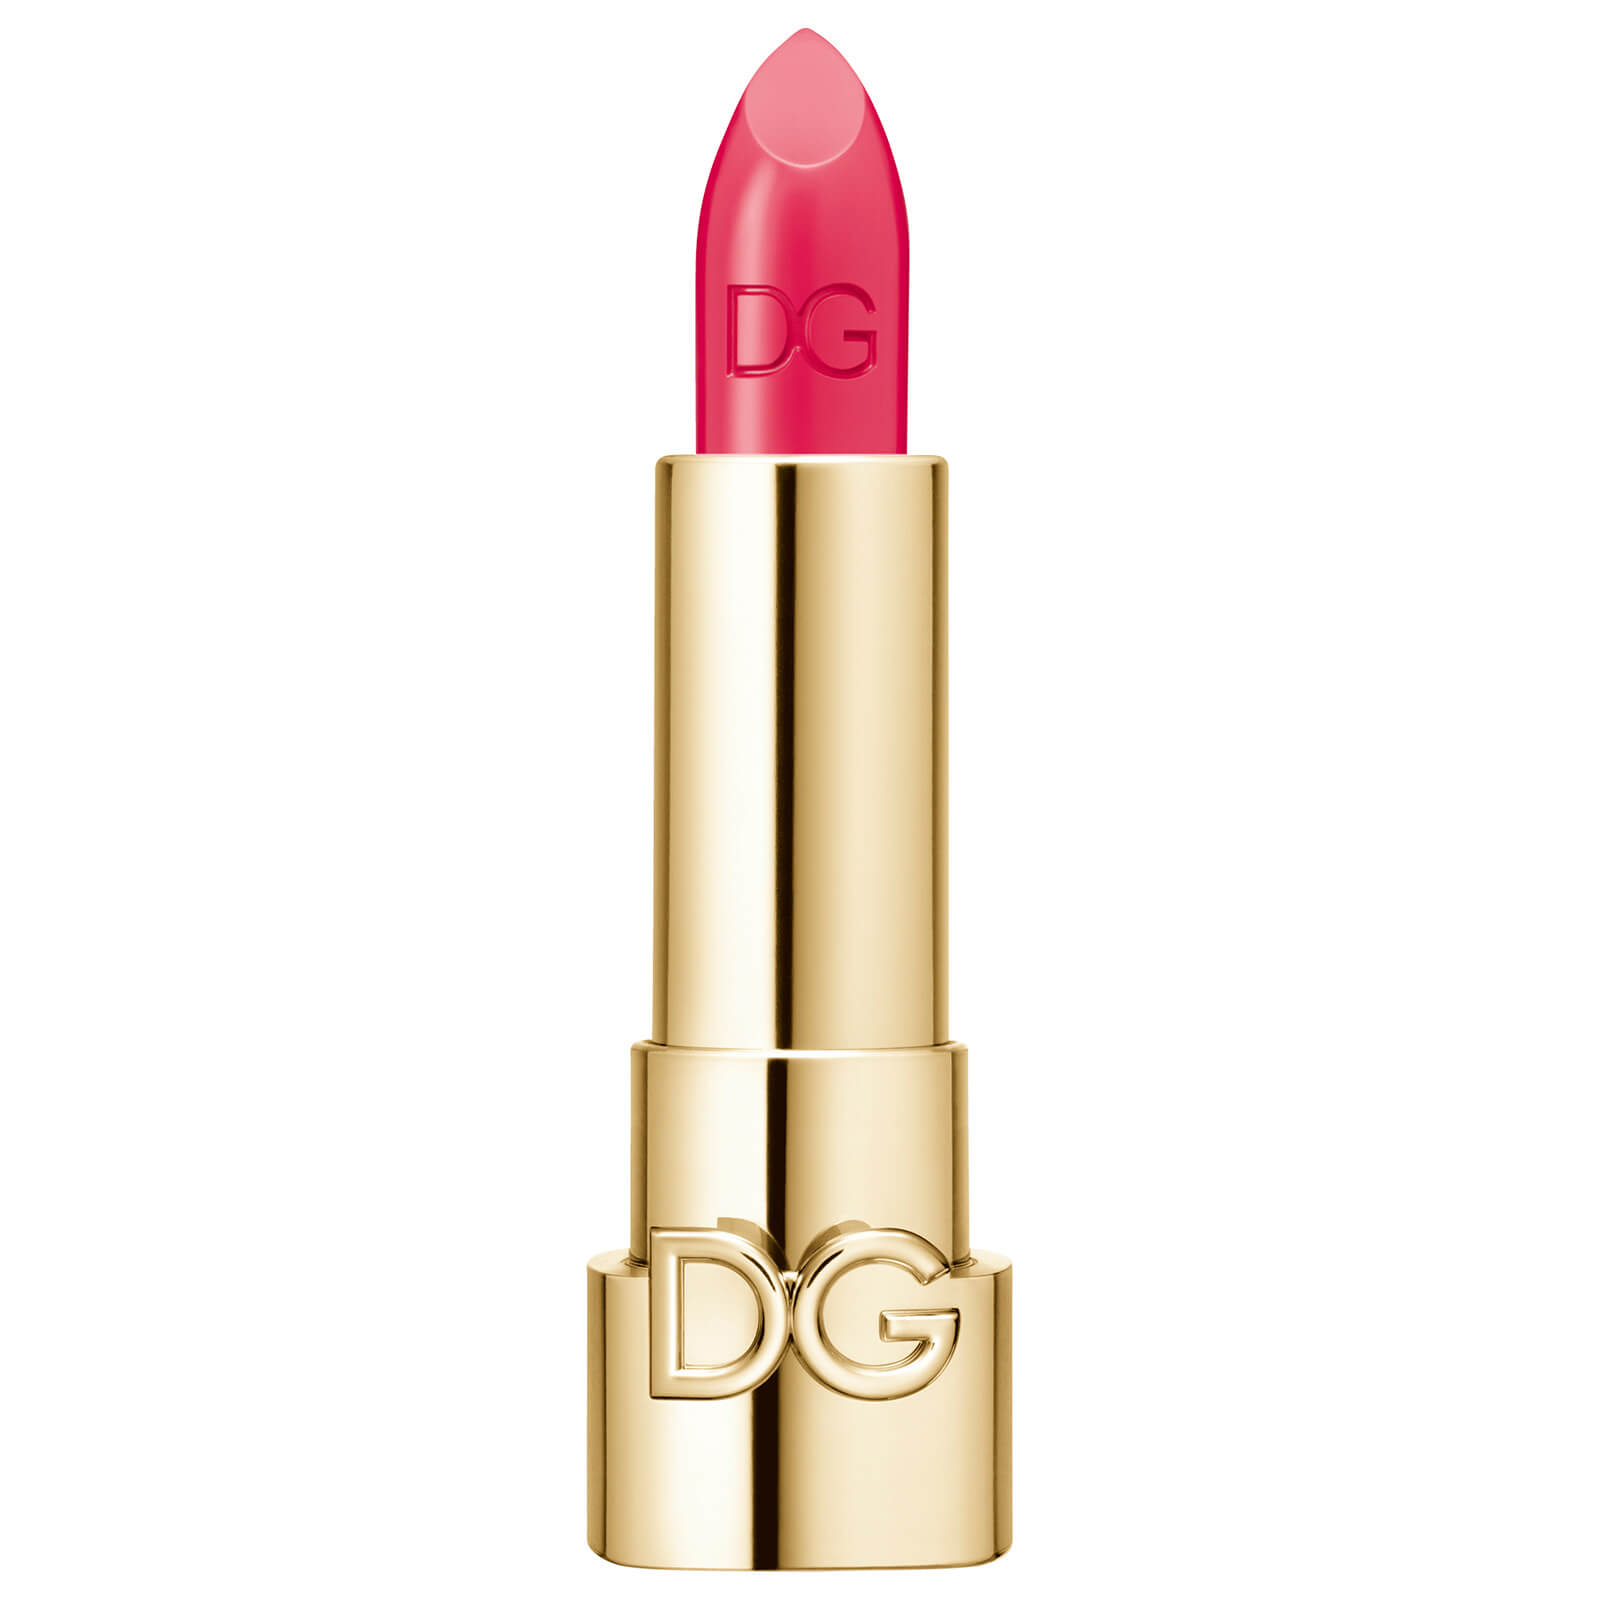 Dolce&Gabbana The Only One Lipstick 1.7g (No Cap) (Various Shades) - 270 Millennial Pink